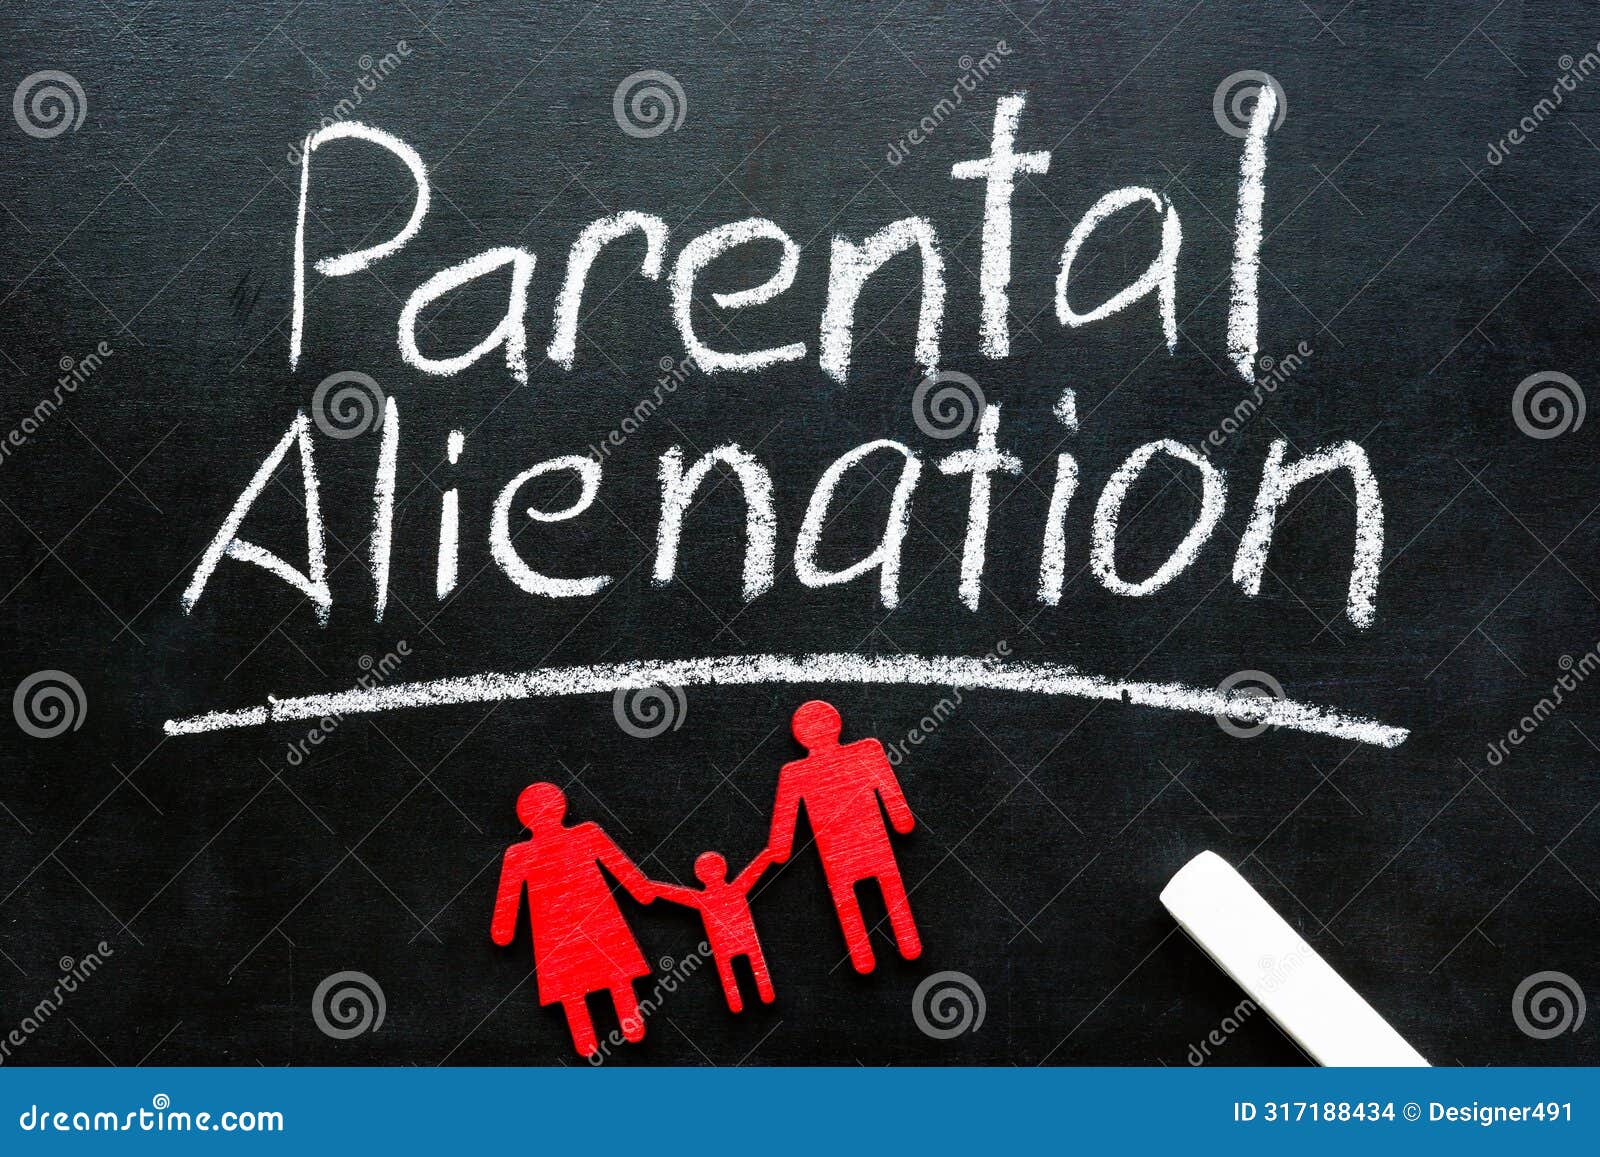 parental alienation. chalk inscription on a blackboard and family figures.